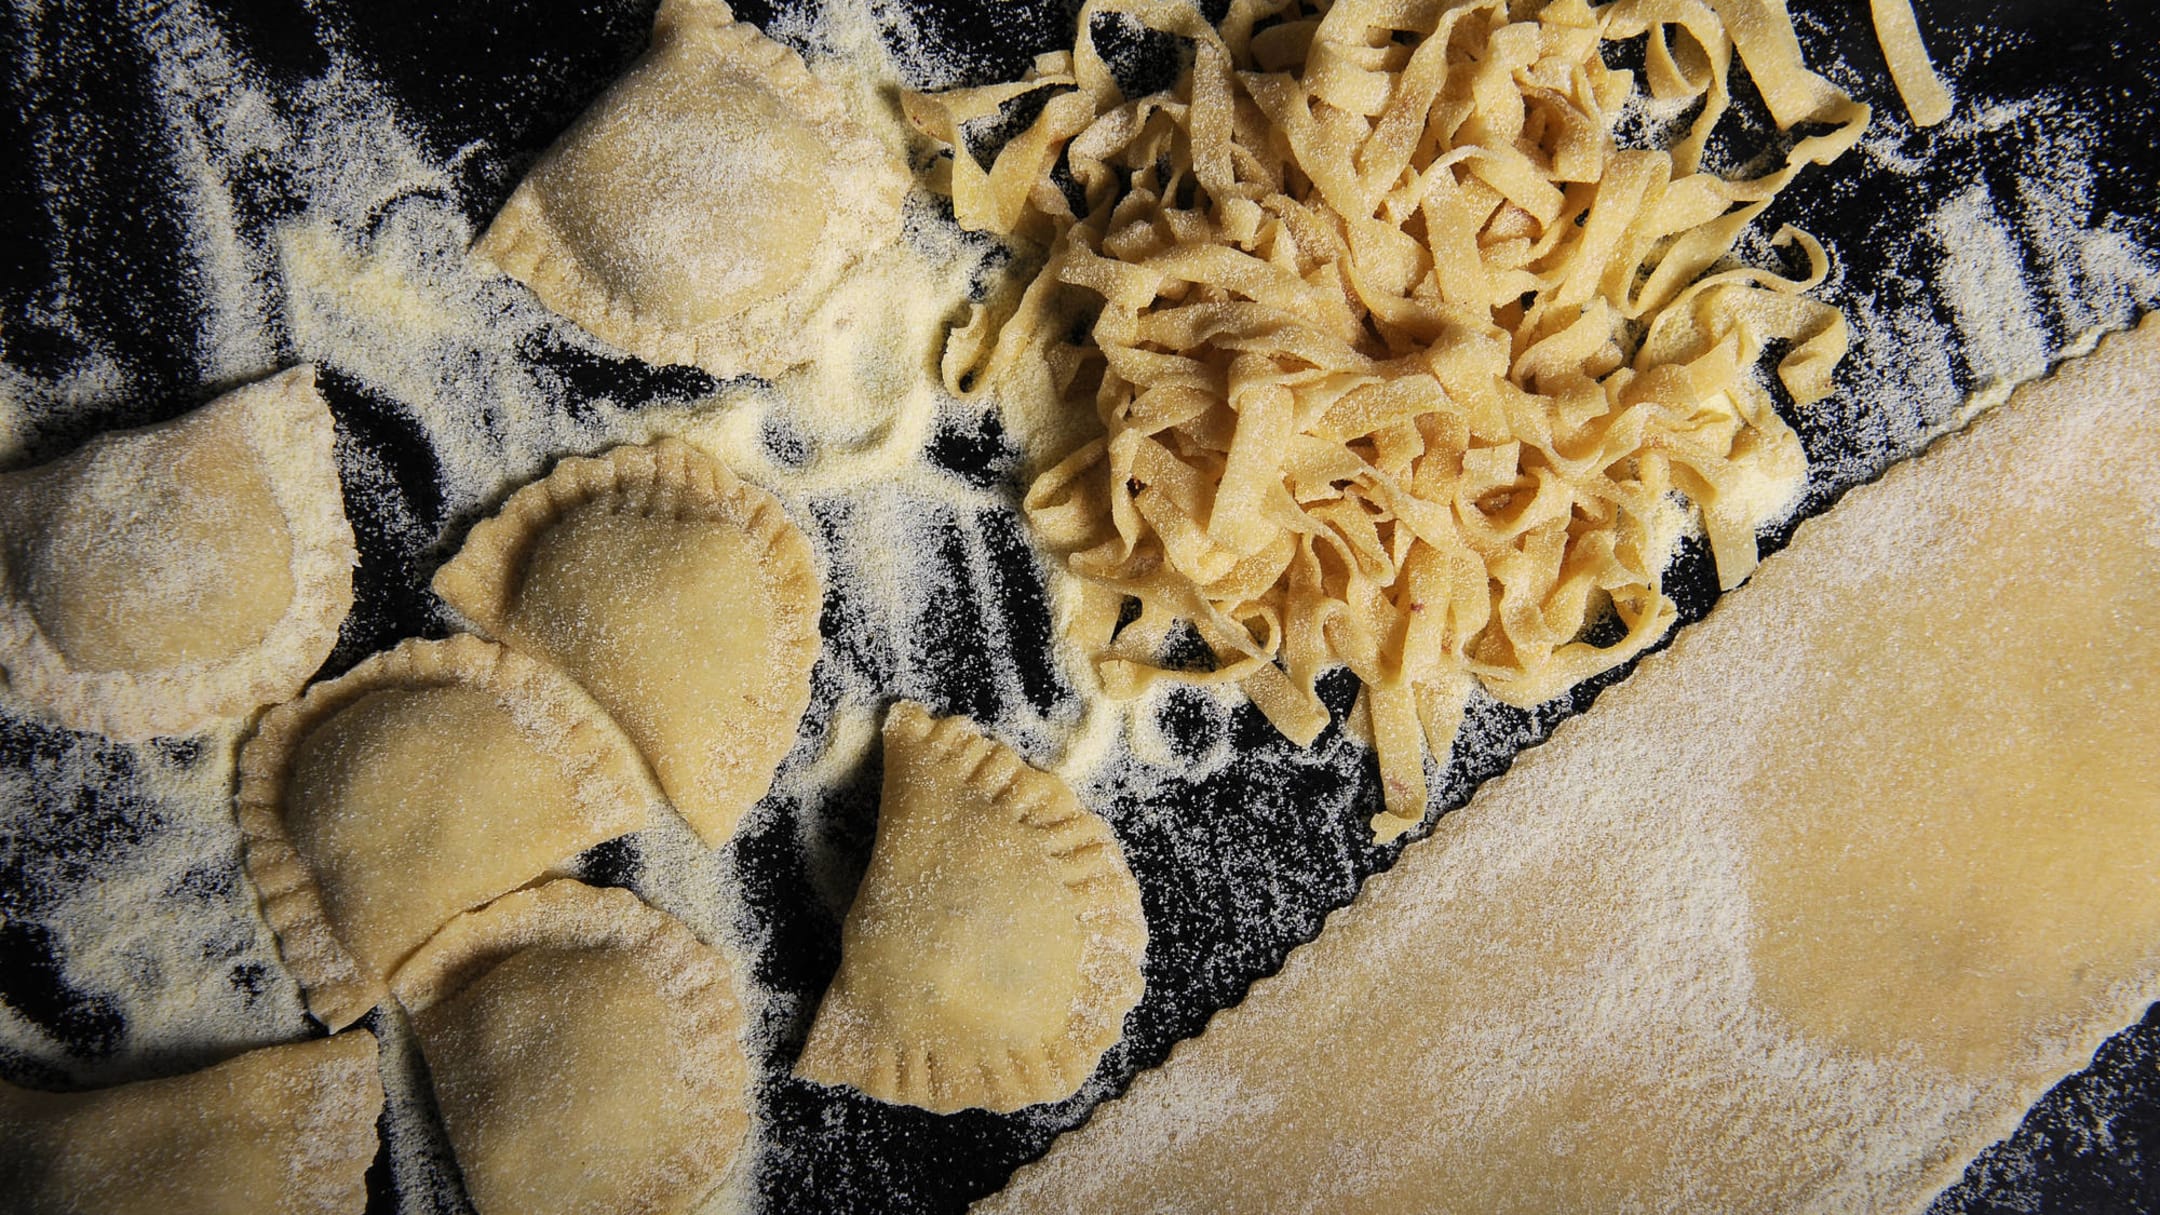 Our 25 favorite pasta dishes | Yardbarker